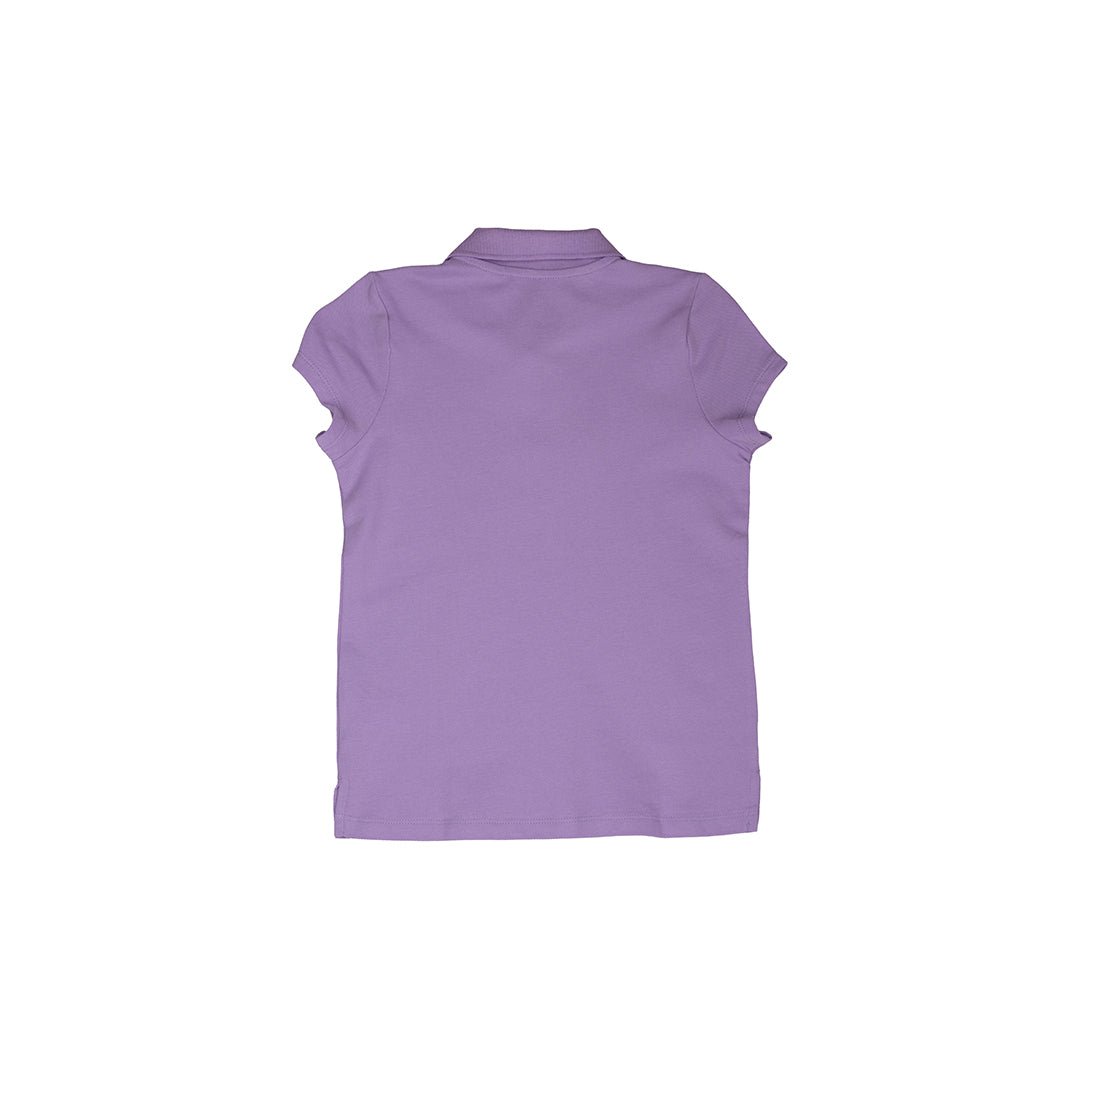 Children Place Brand New Girls T-Shirt - mymadstore.com